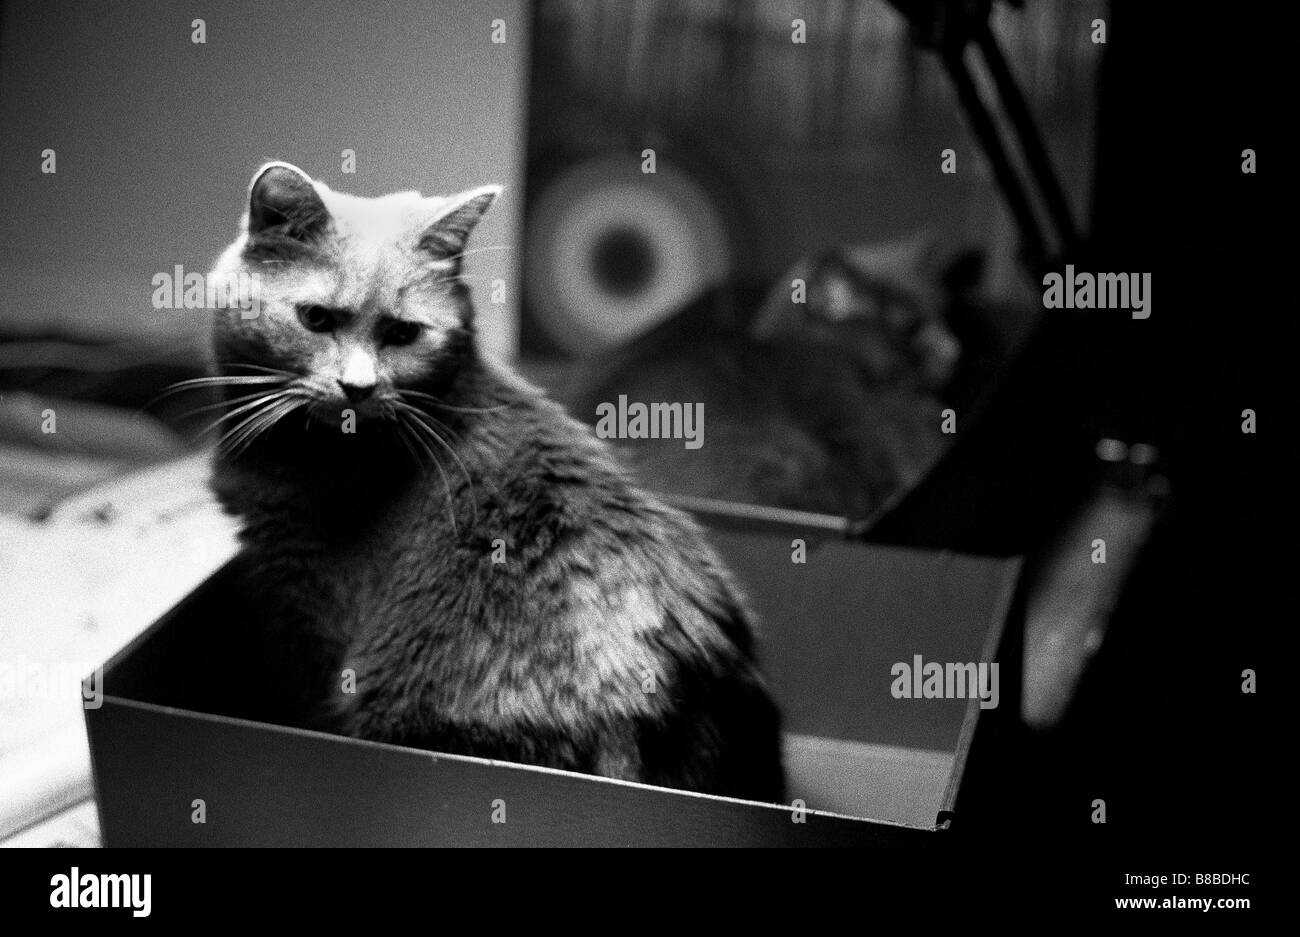 Imageworks Photographic; B/W Cat Cardboard Box Stock Photo